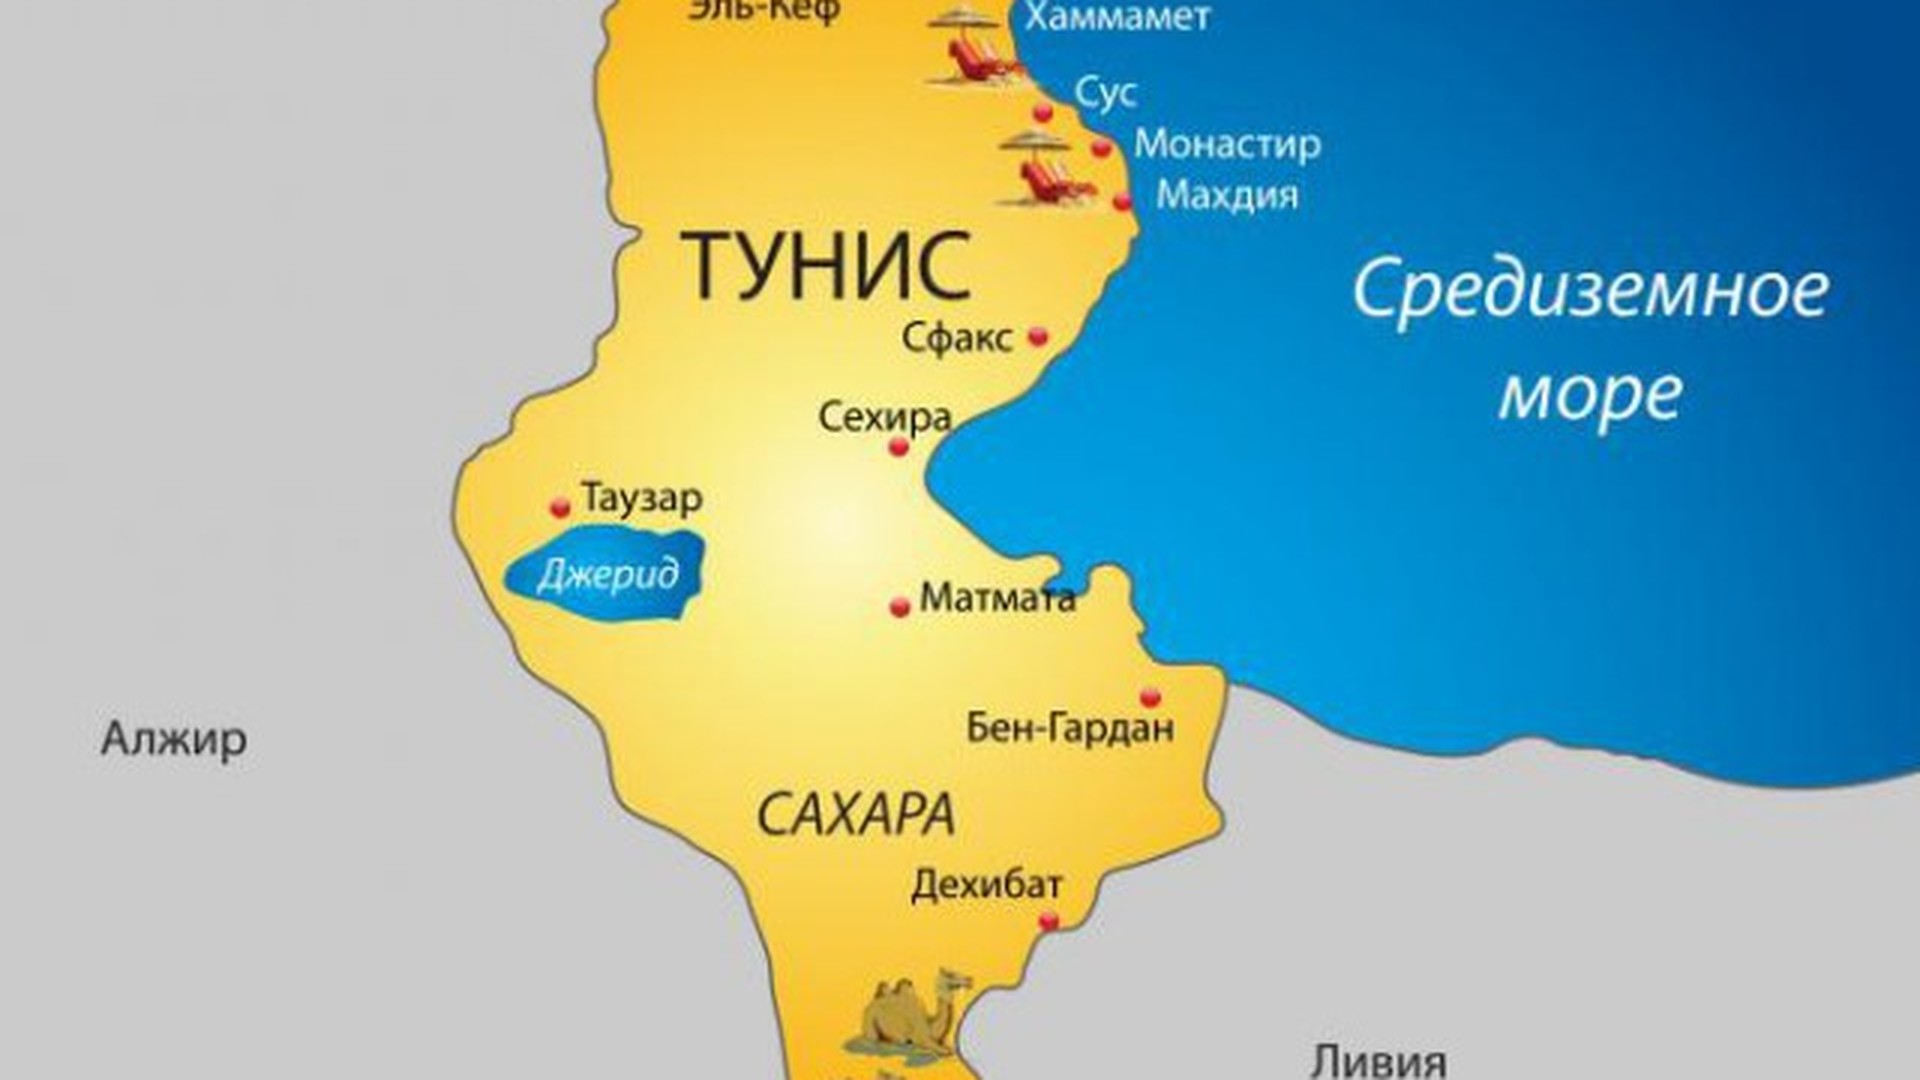 Тунис (столица Тунис), на карте